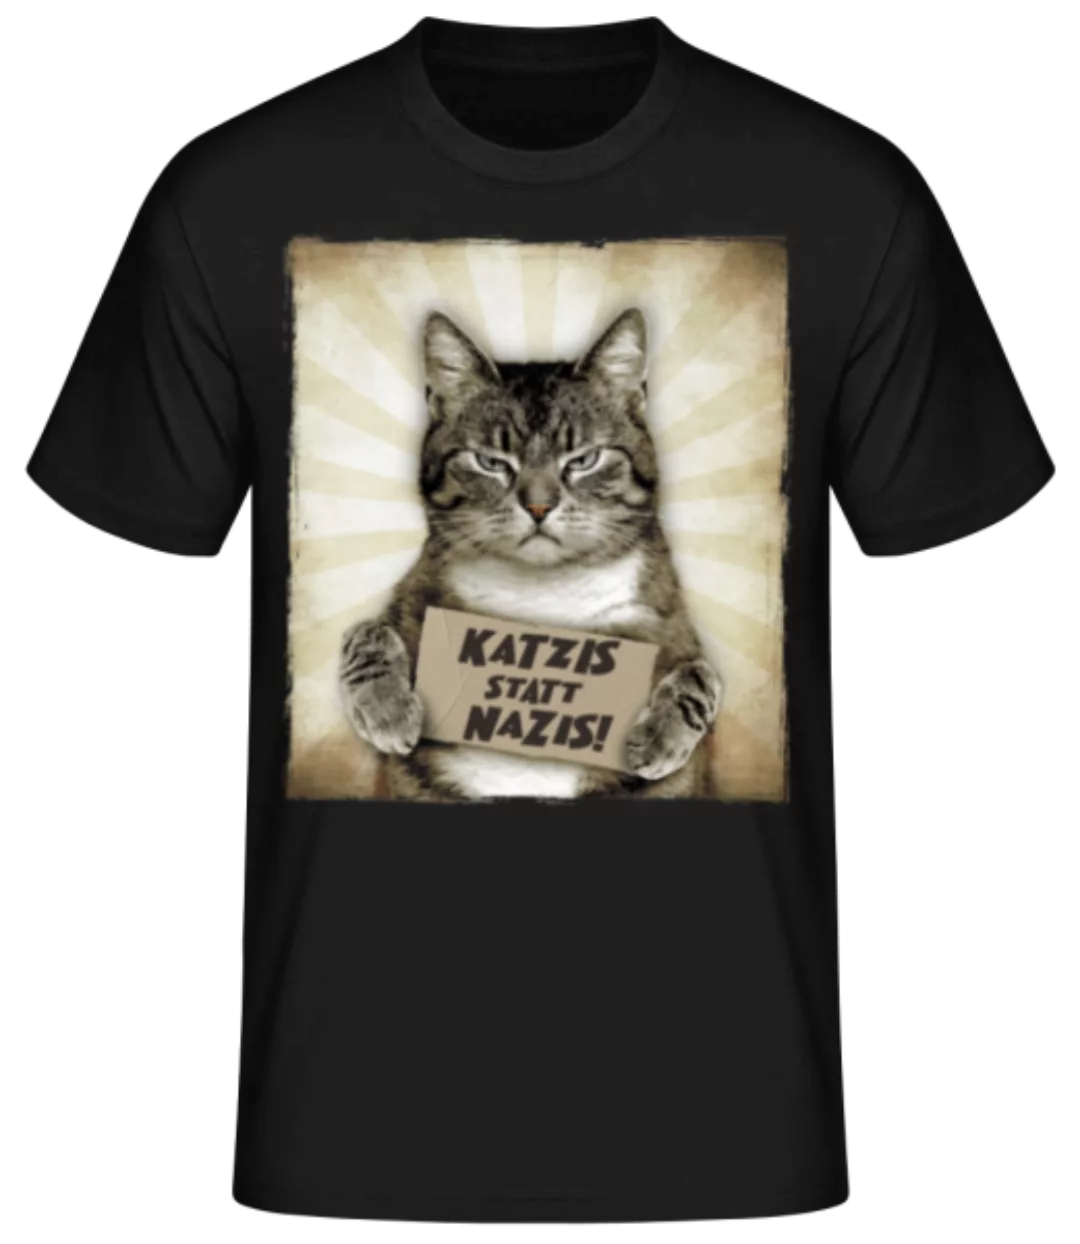 Katzis Statt Nazis · Männer Basic T-Shirt günstig online kaufen